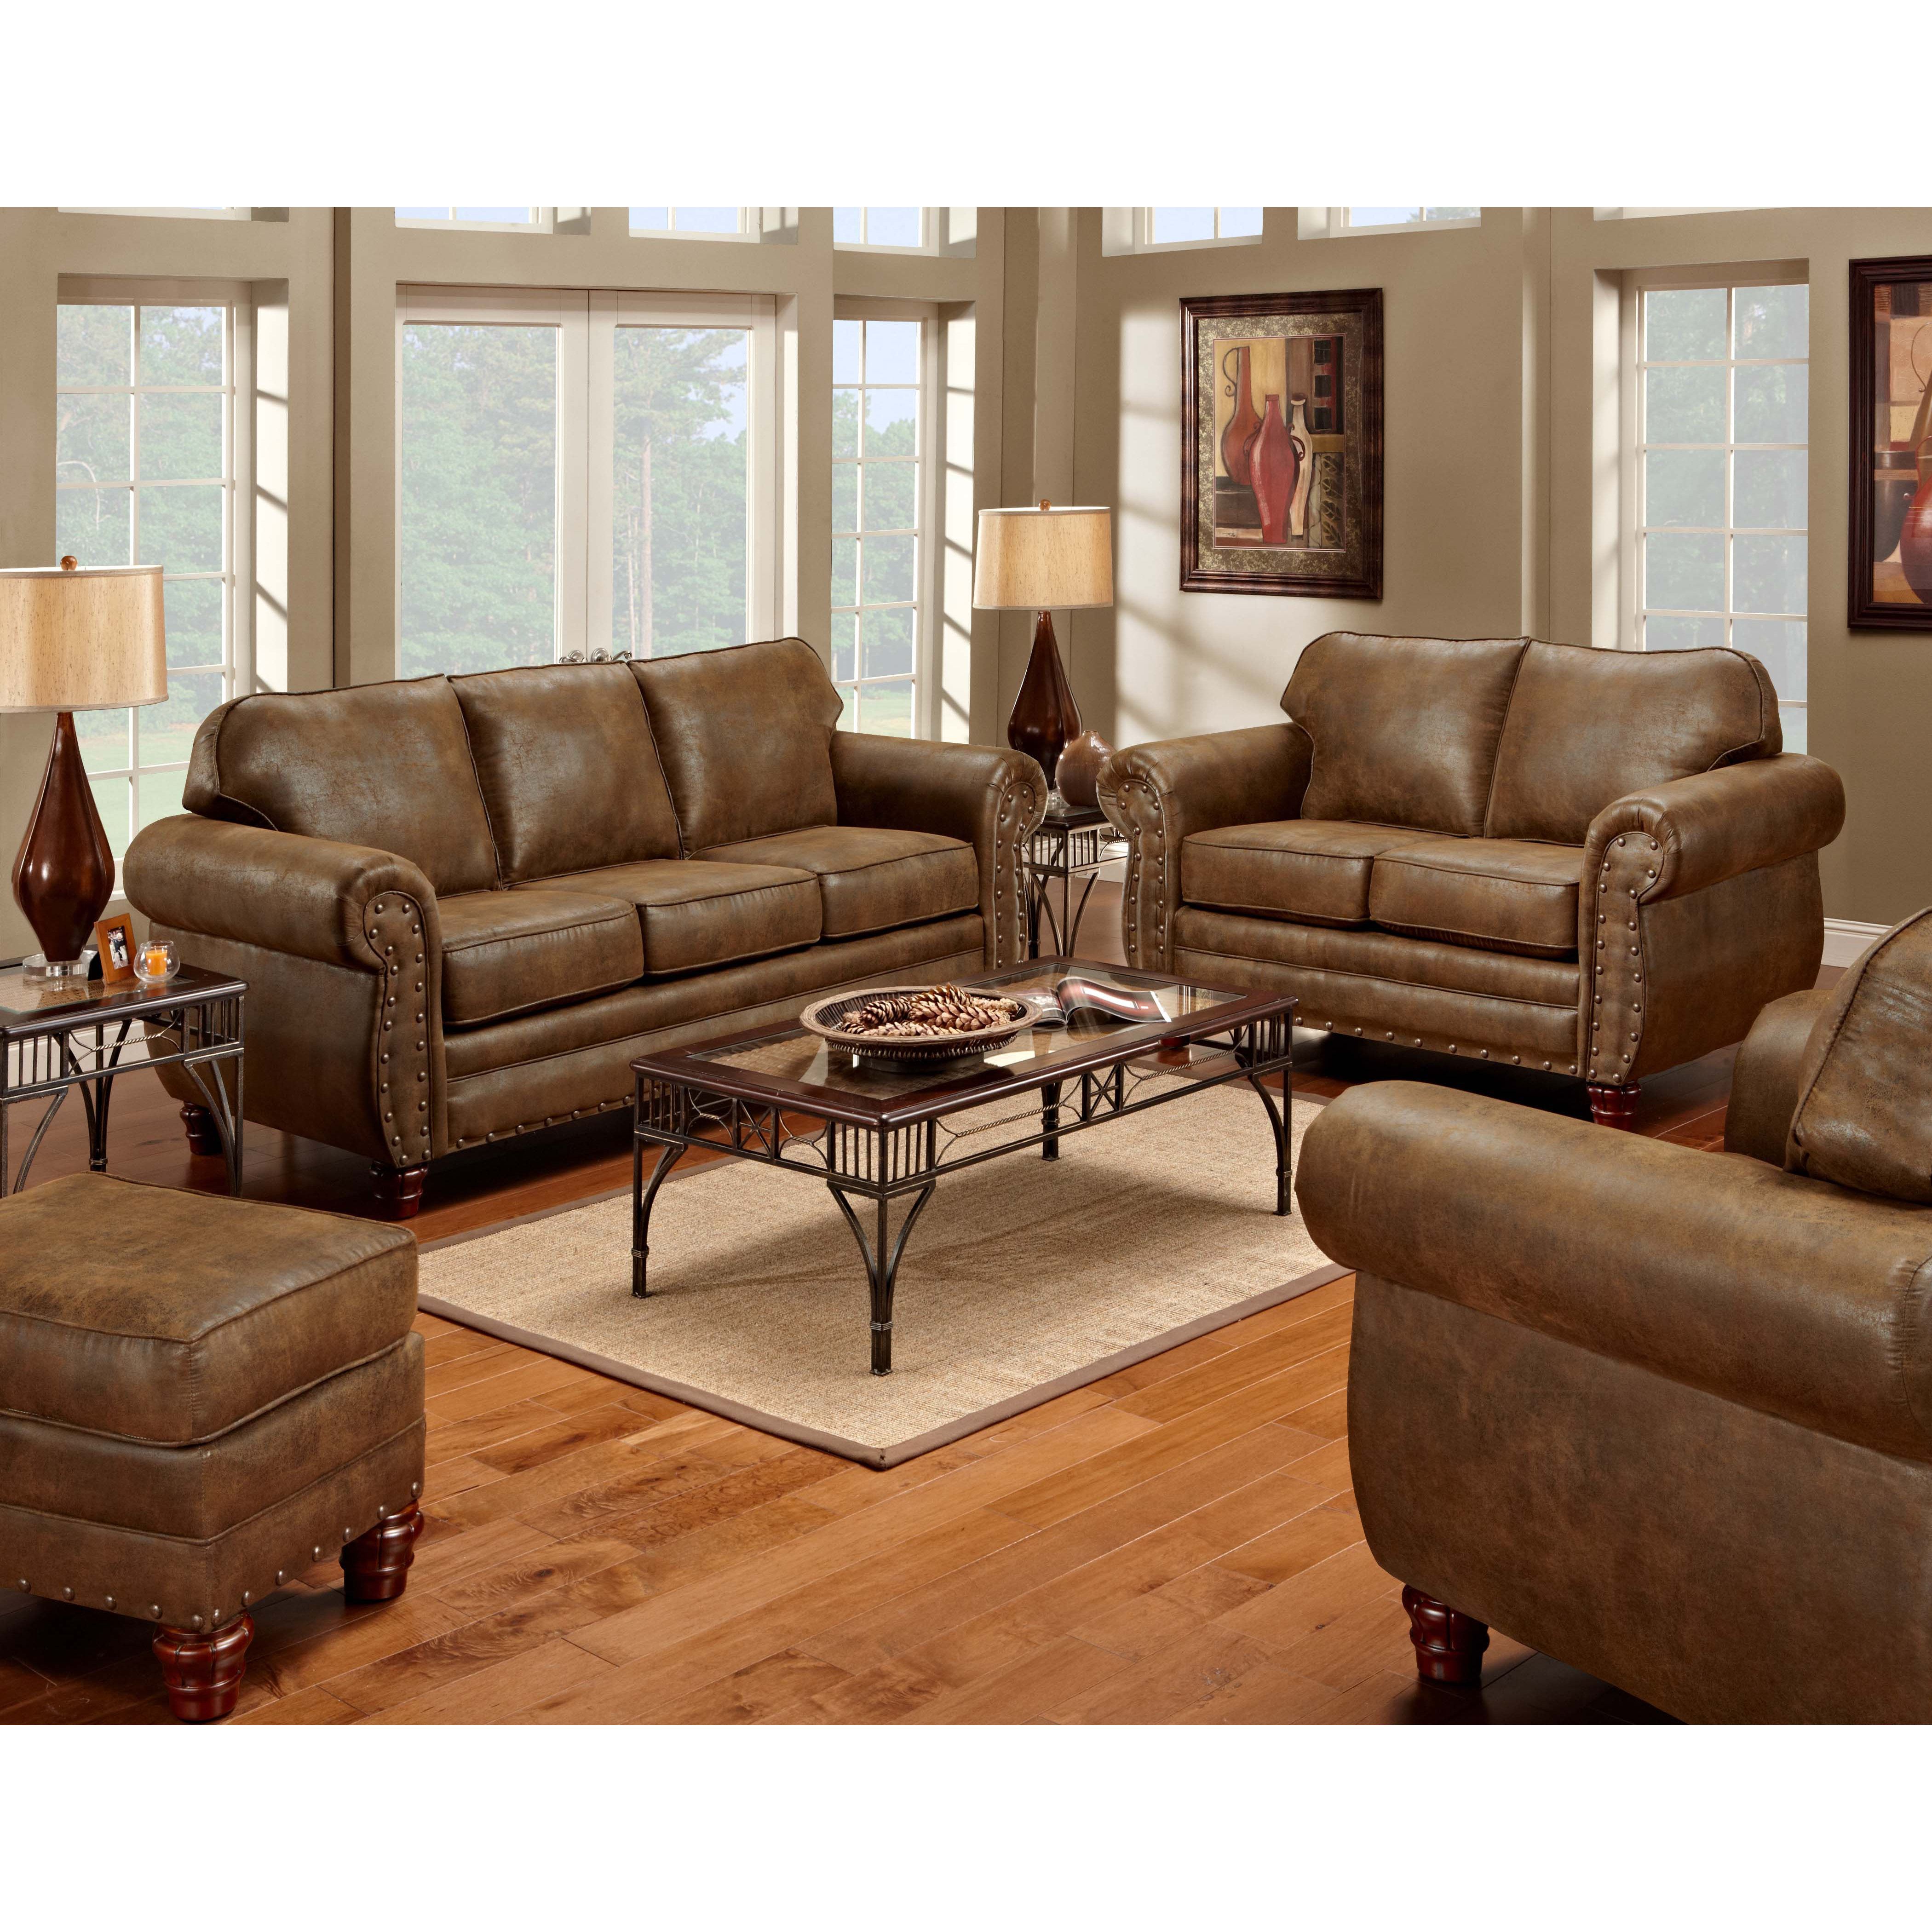 American Furniture Classics Sedona 4 Piece Living Room Set ...